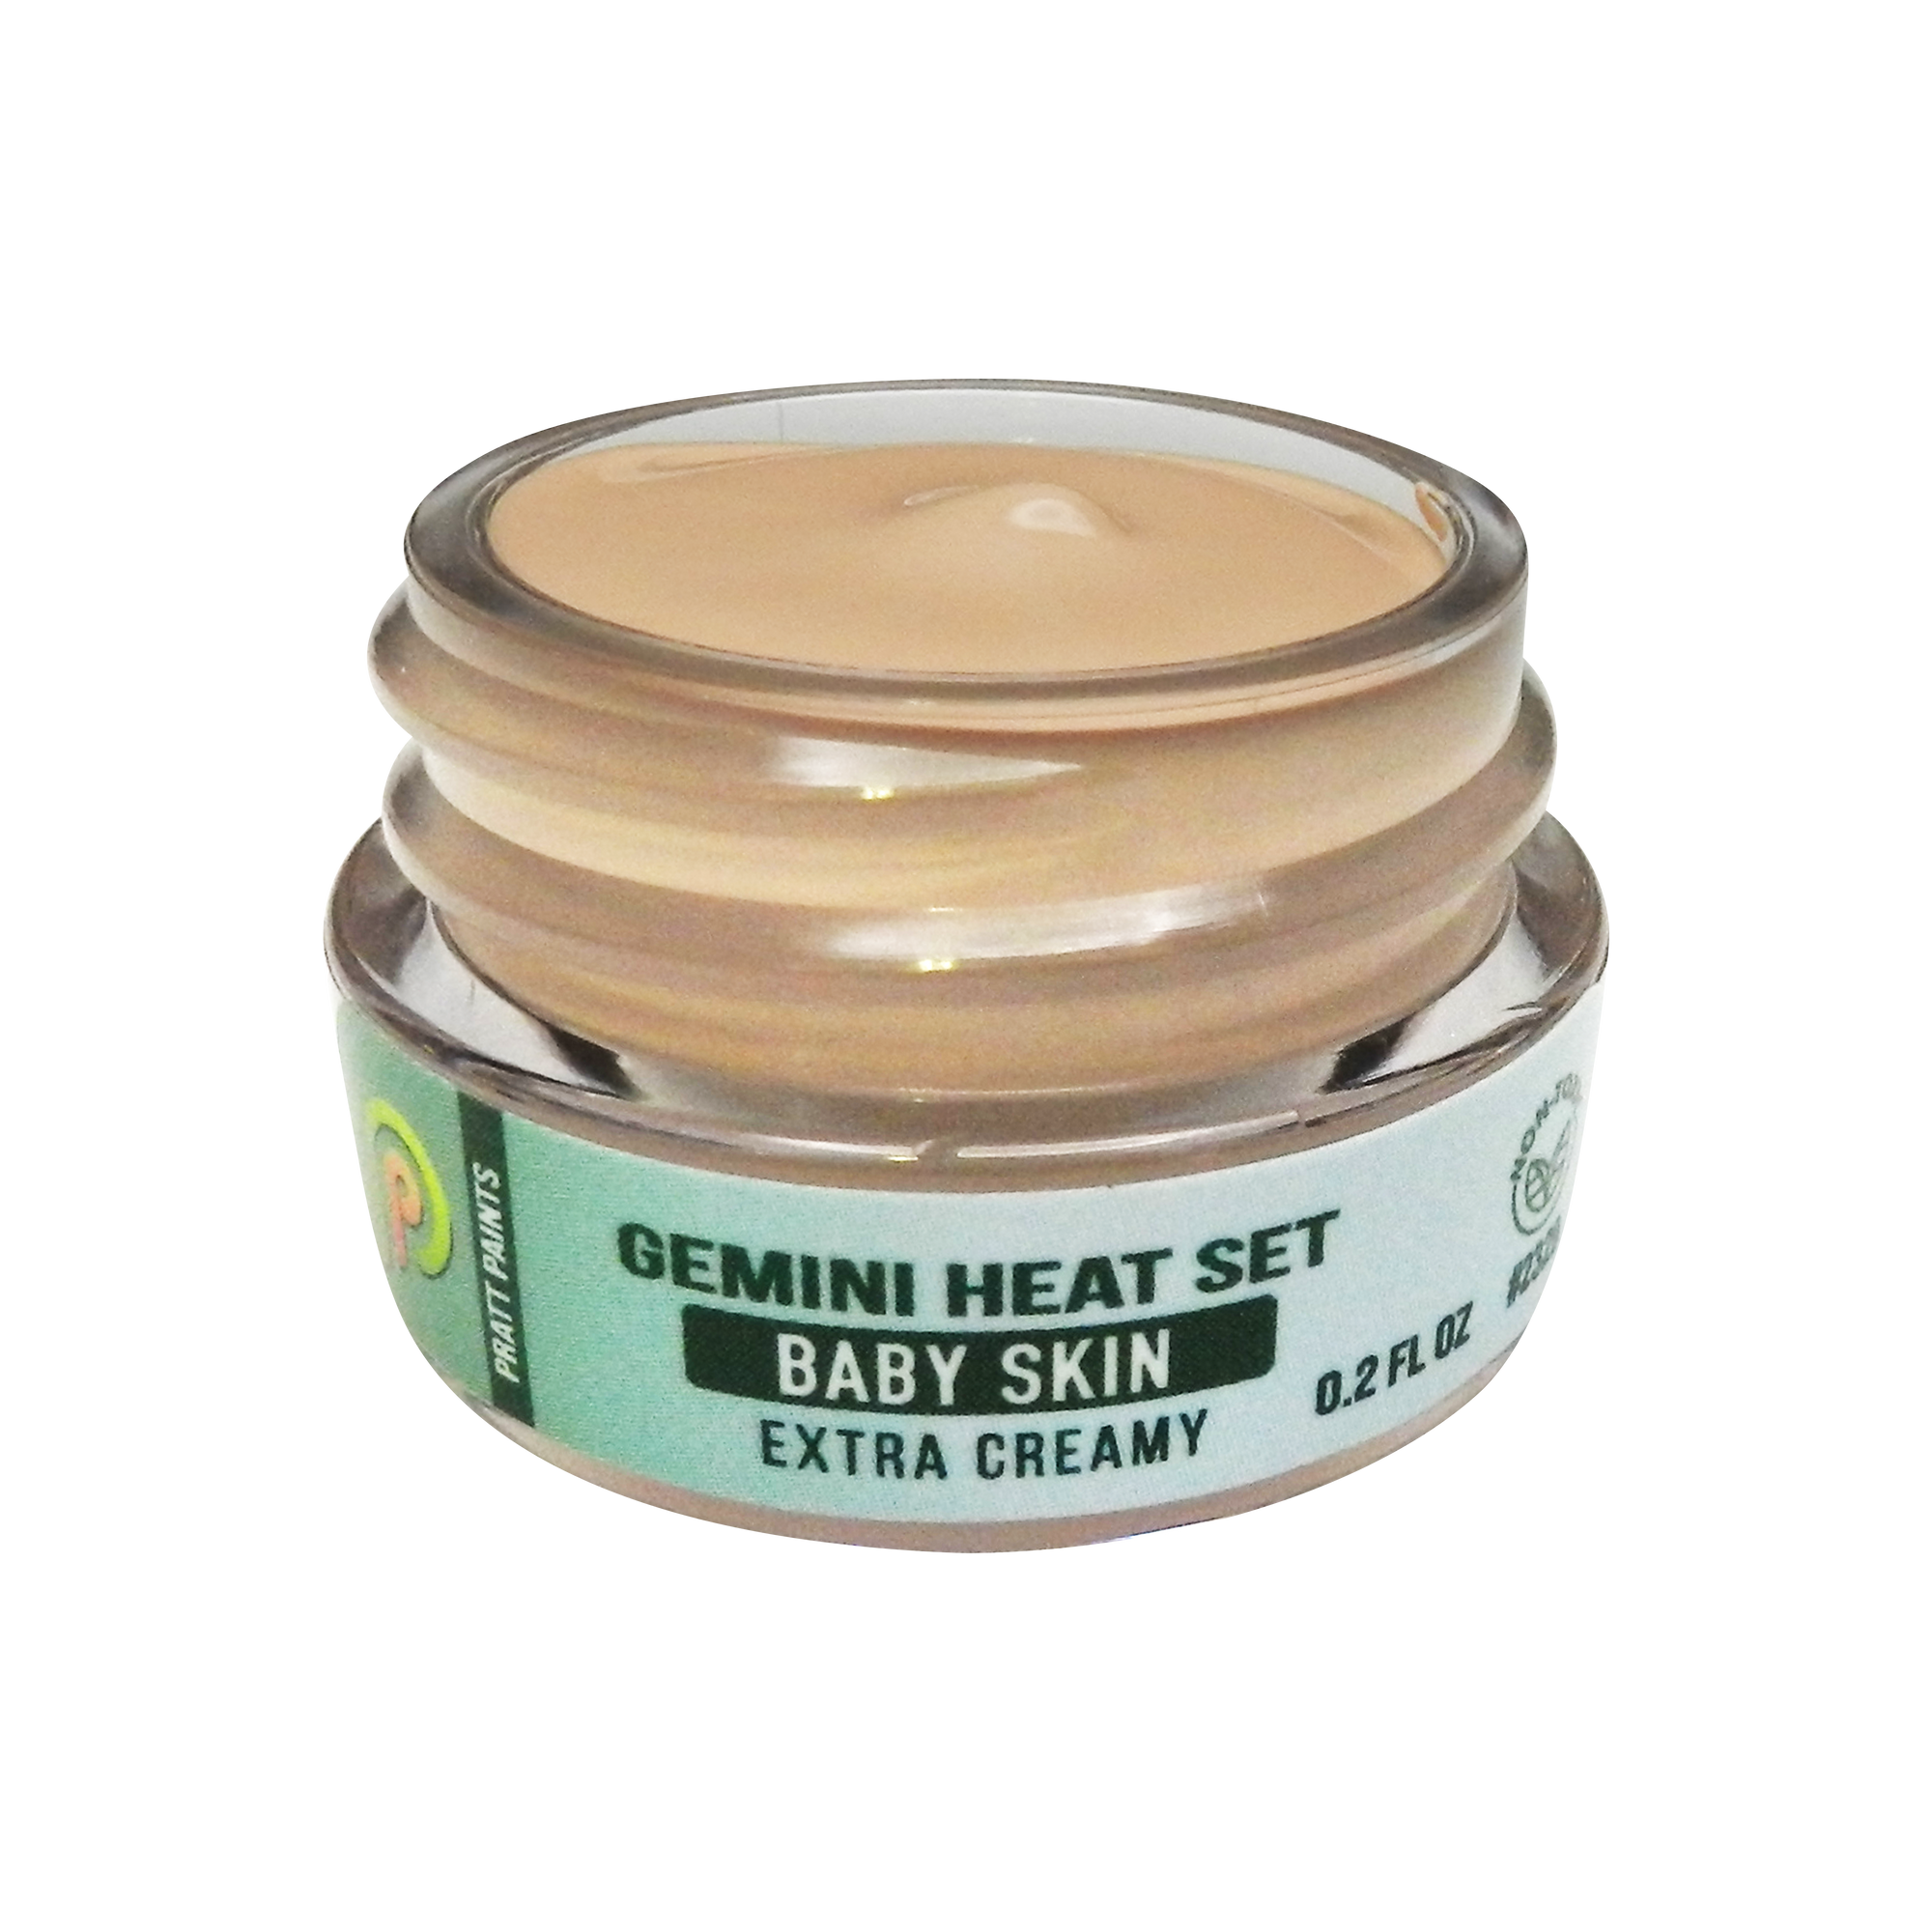 NEW! Baby Skin - Gemini Heat Set Paint - 7 grams #2329